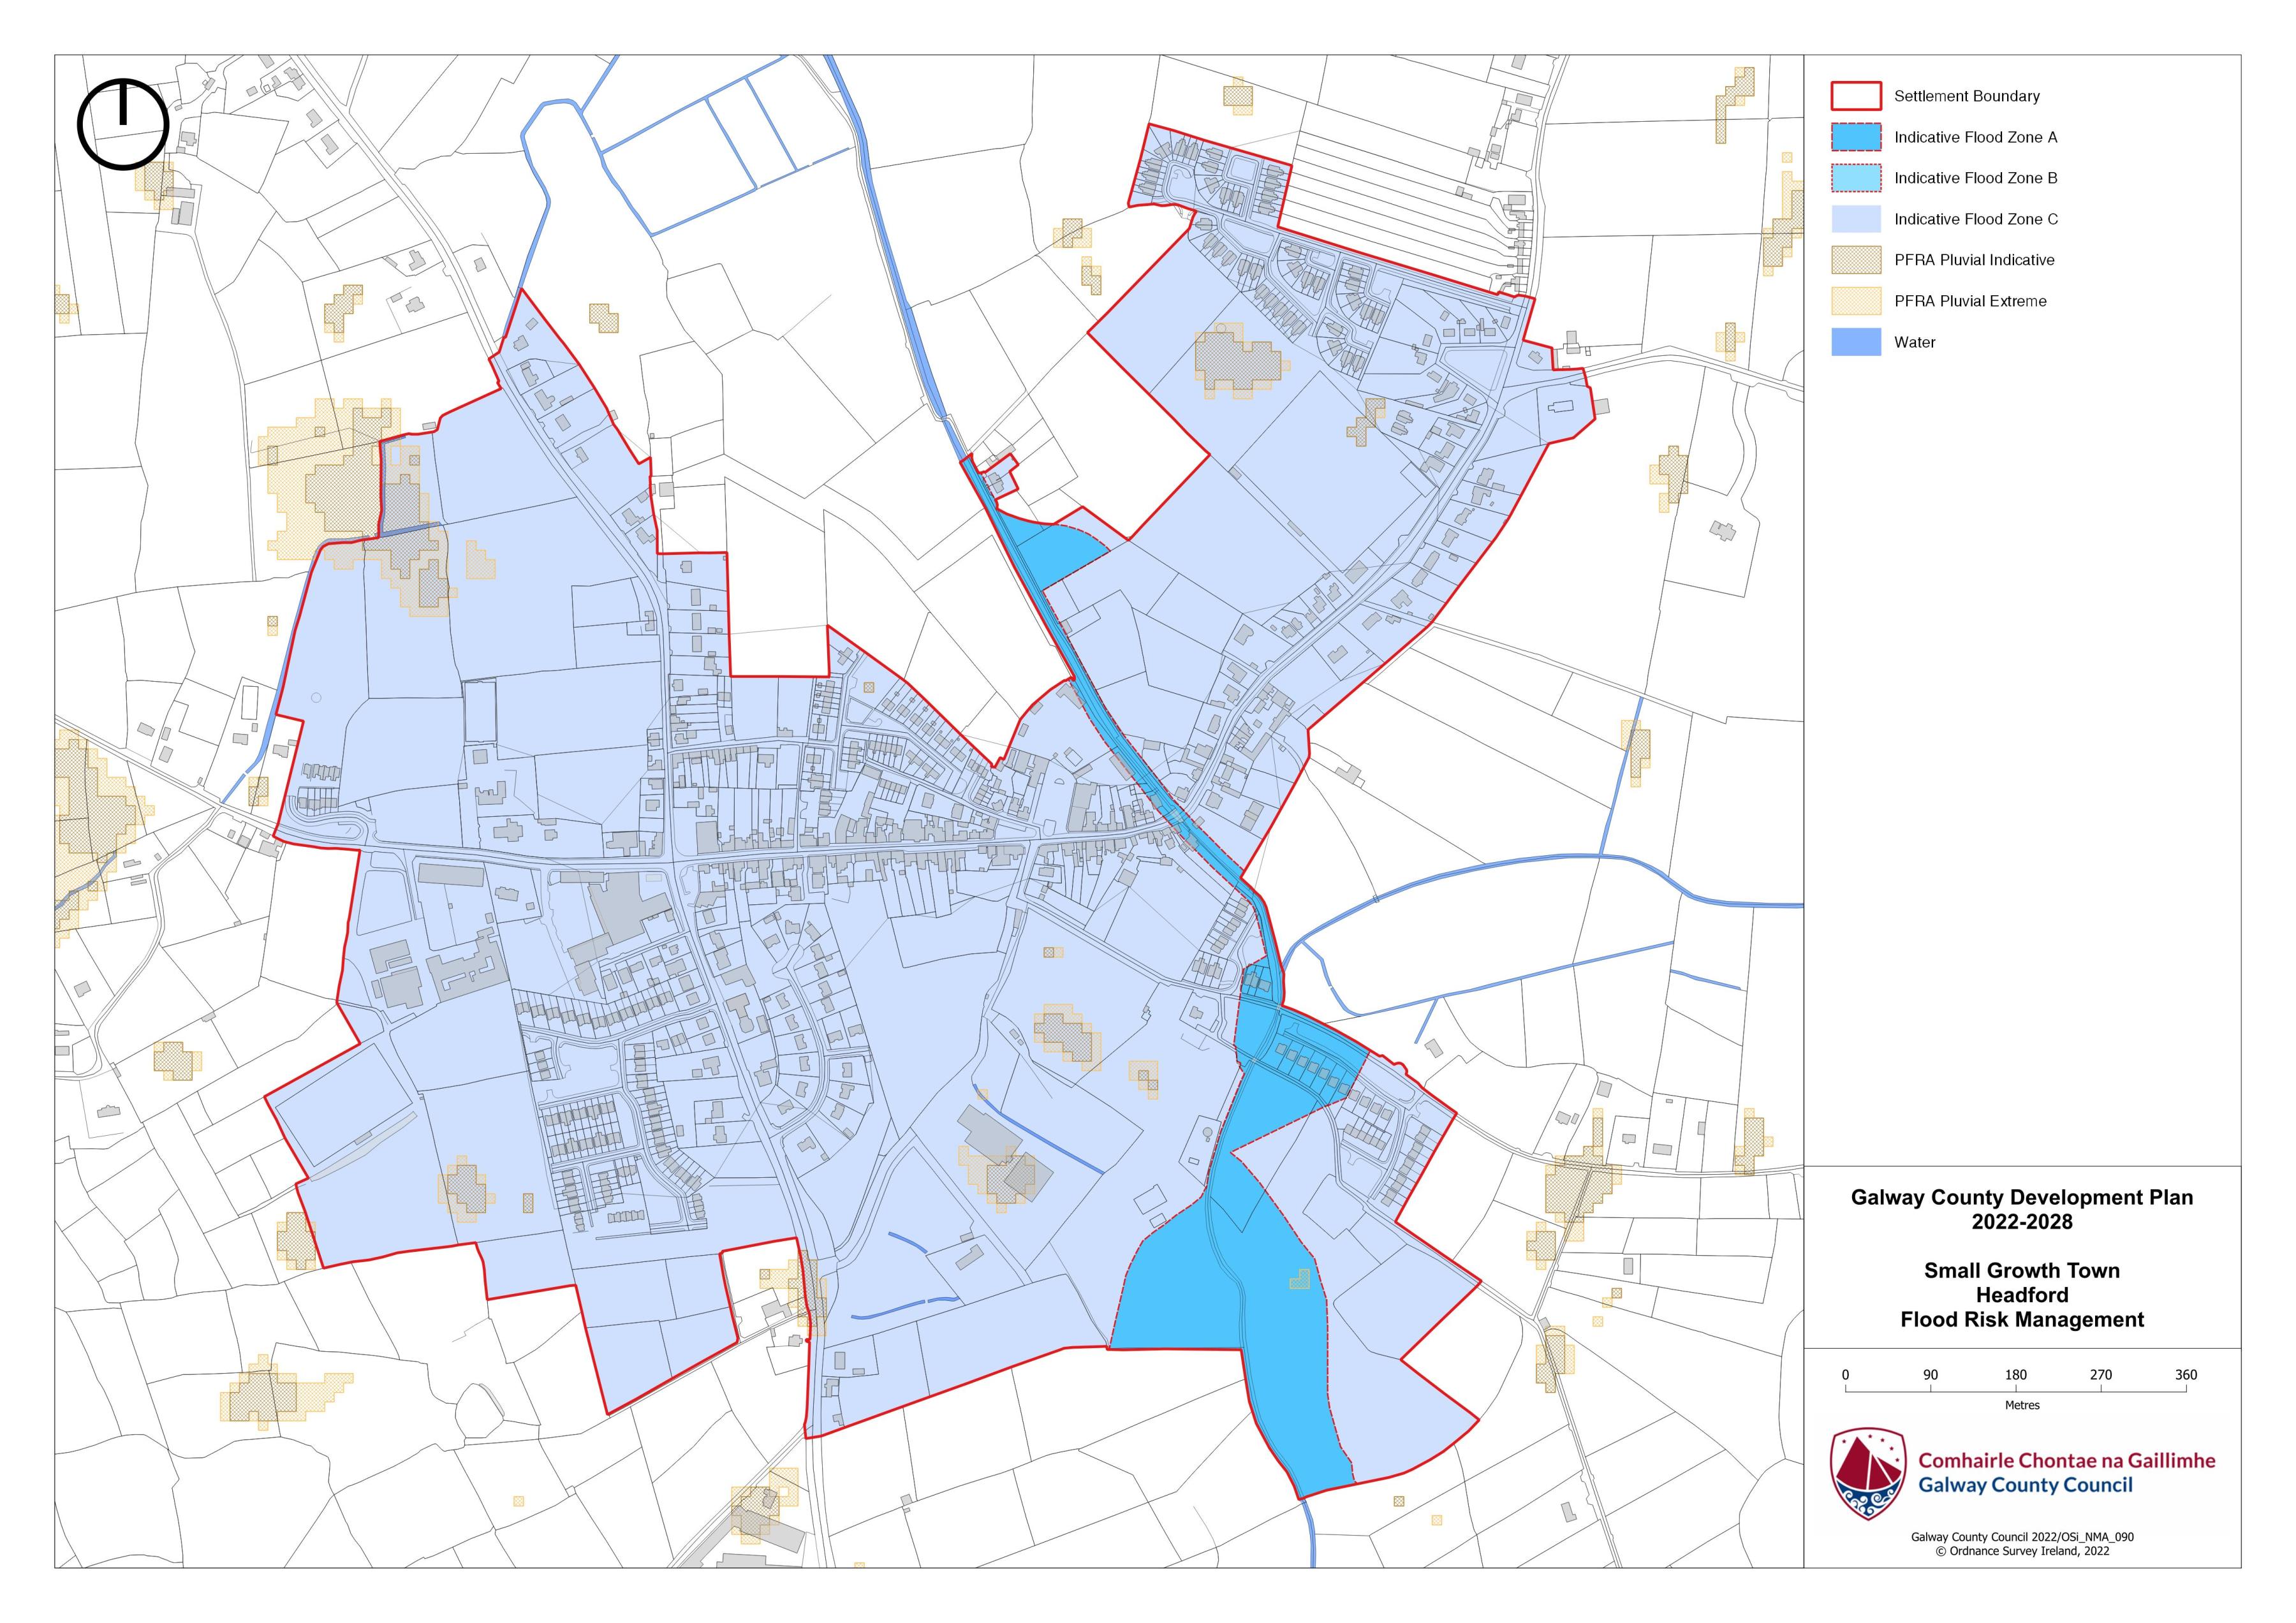 Headford Flood Risk Management Map